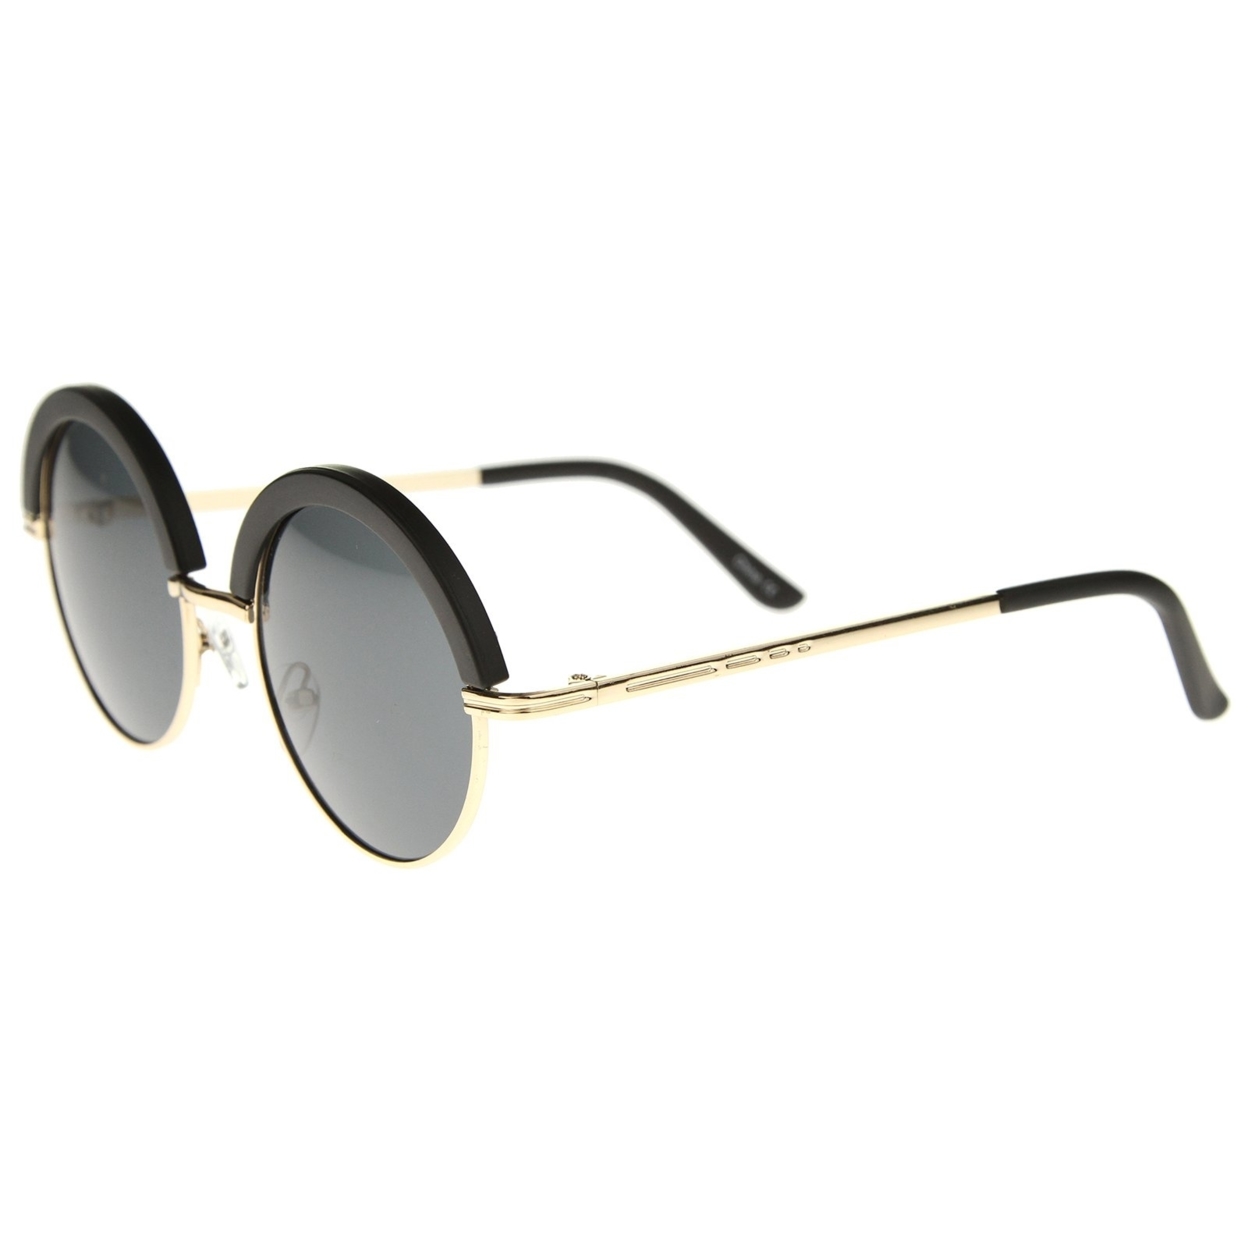 Mod Fashion Oversize Half-Frame Brow Eyelid Round Sunglasses 50mm - Shiny Black-Gunmetal / Green